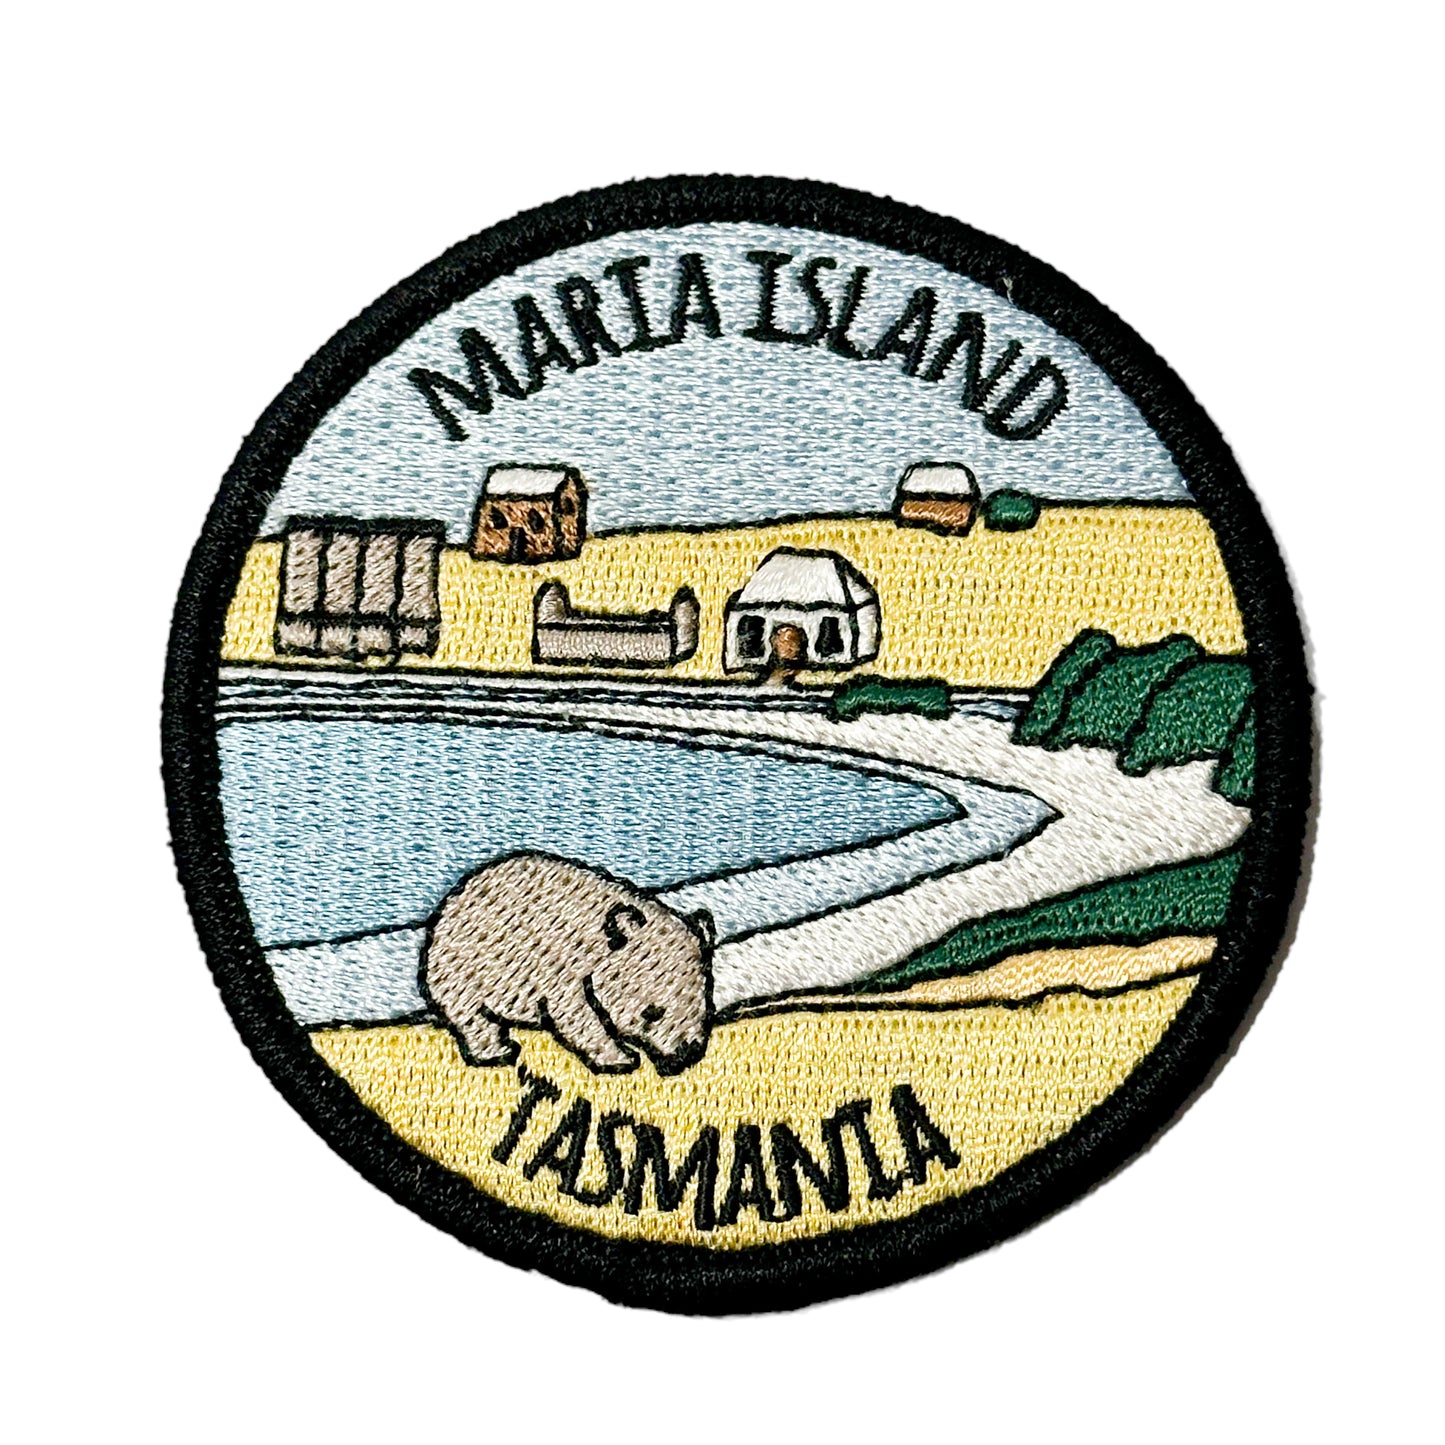 Maria Island Patch